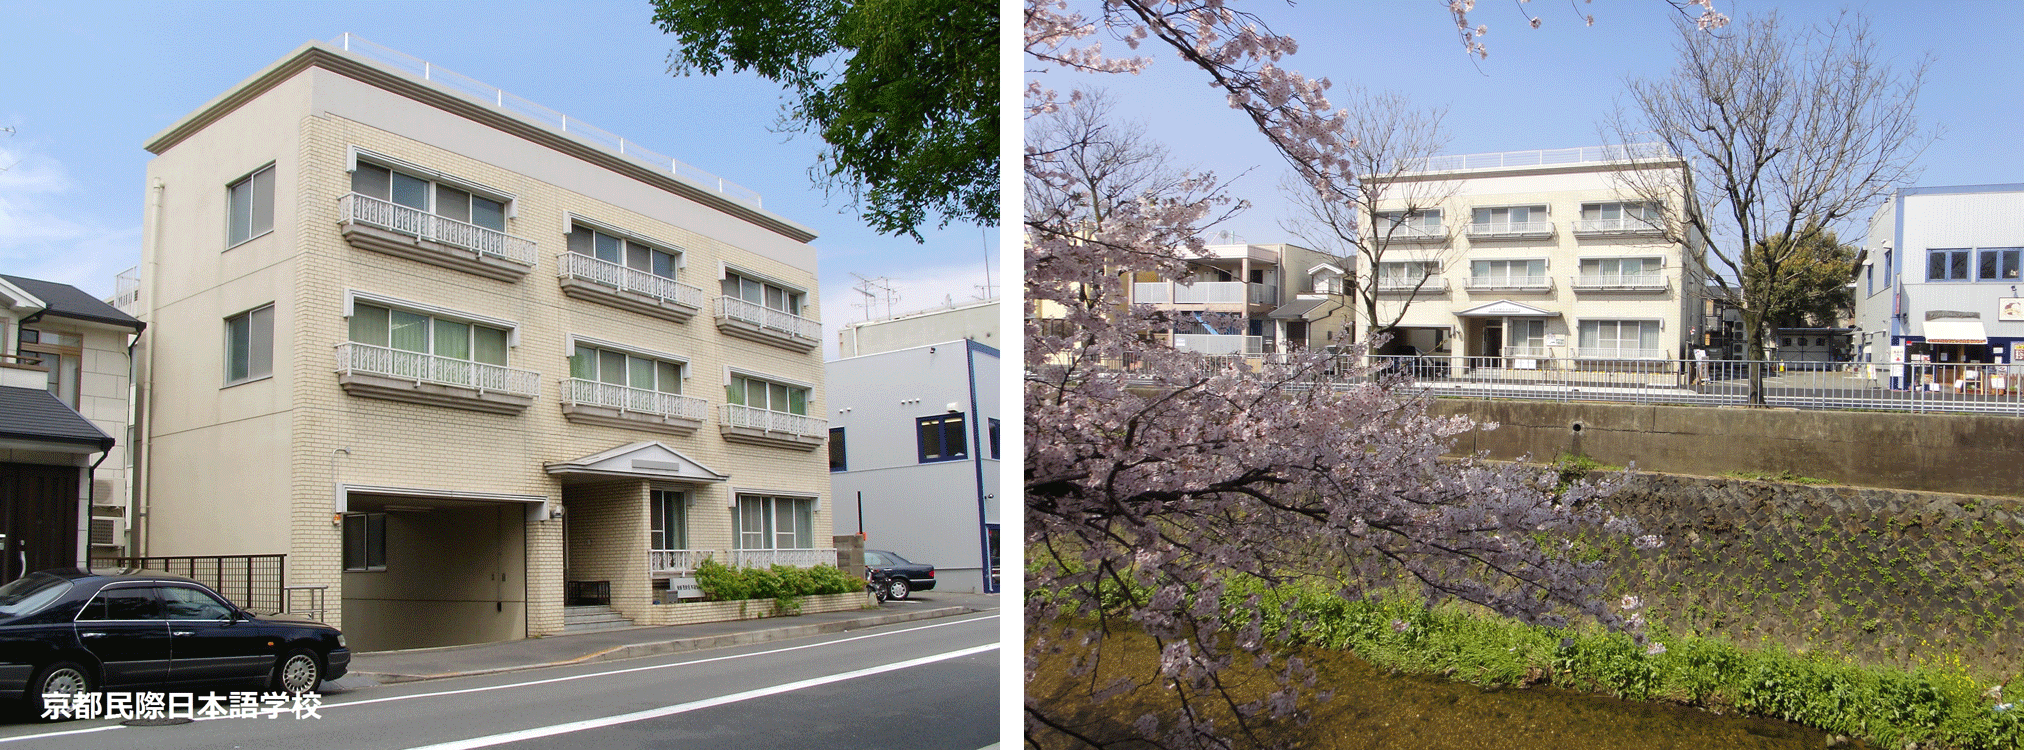 kyoto minsai school